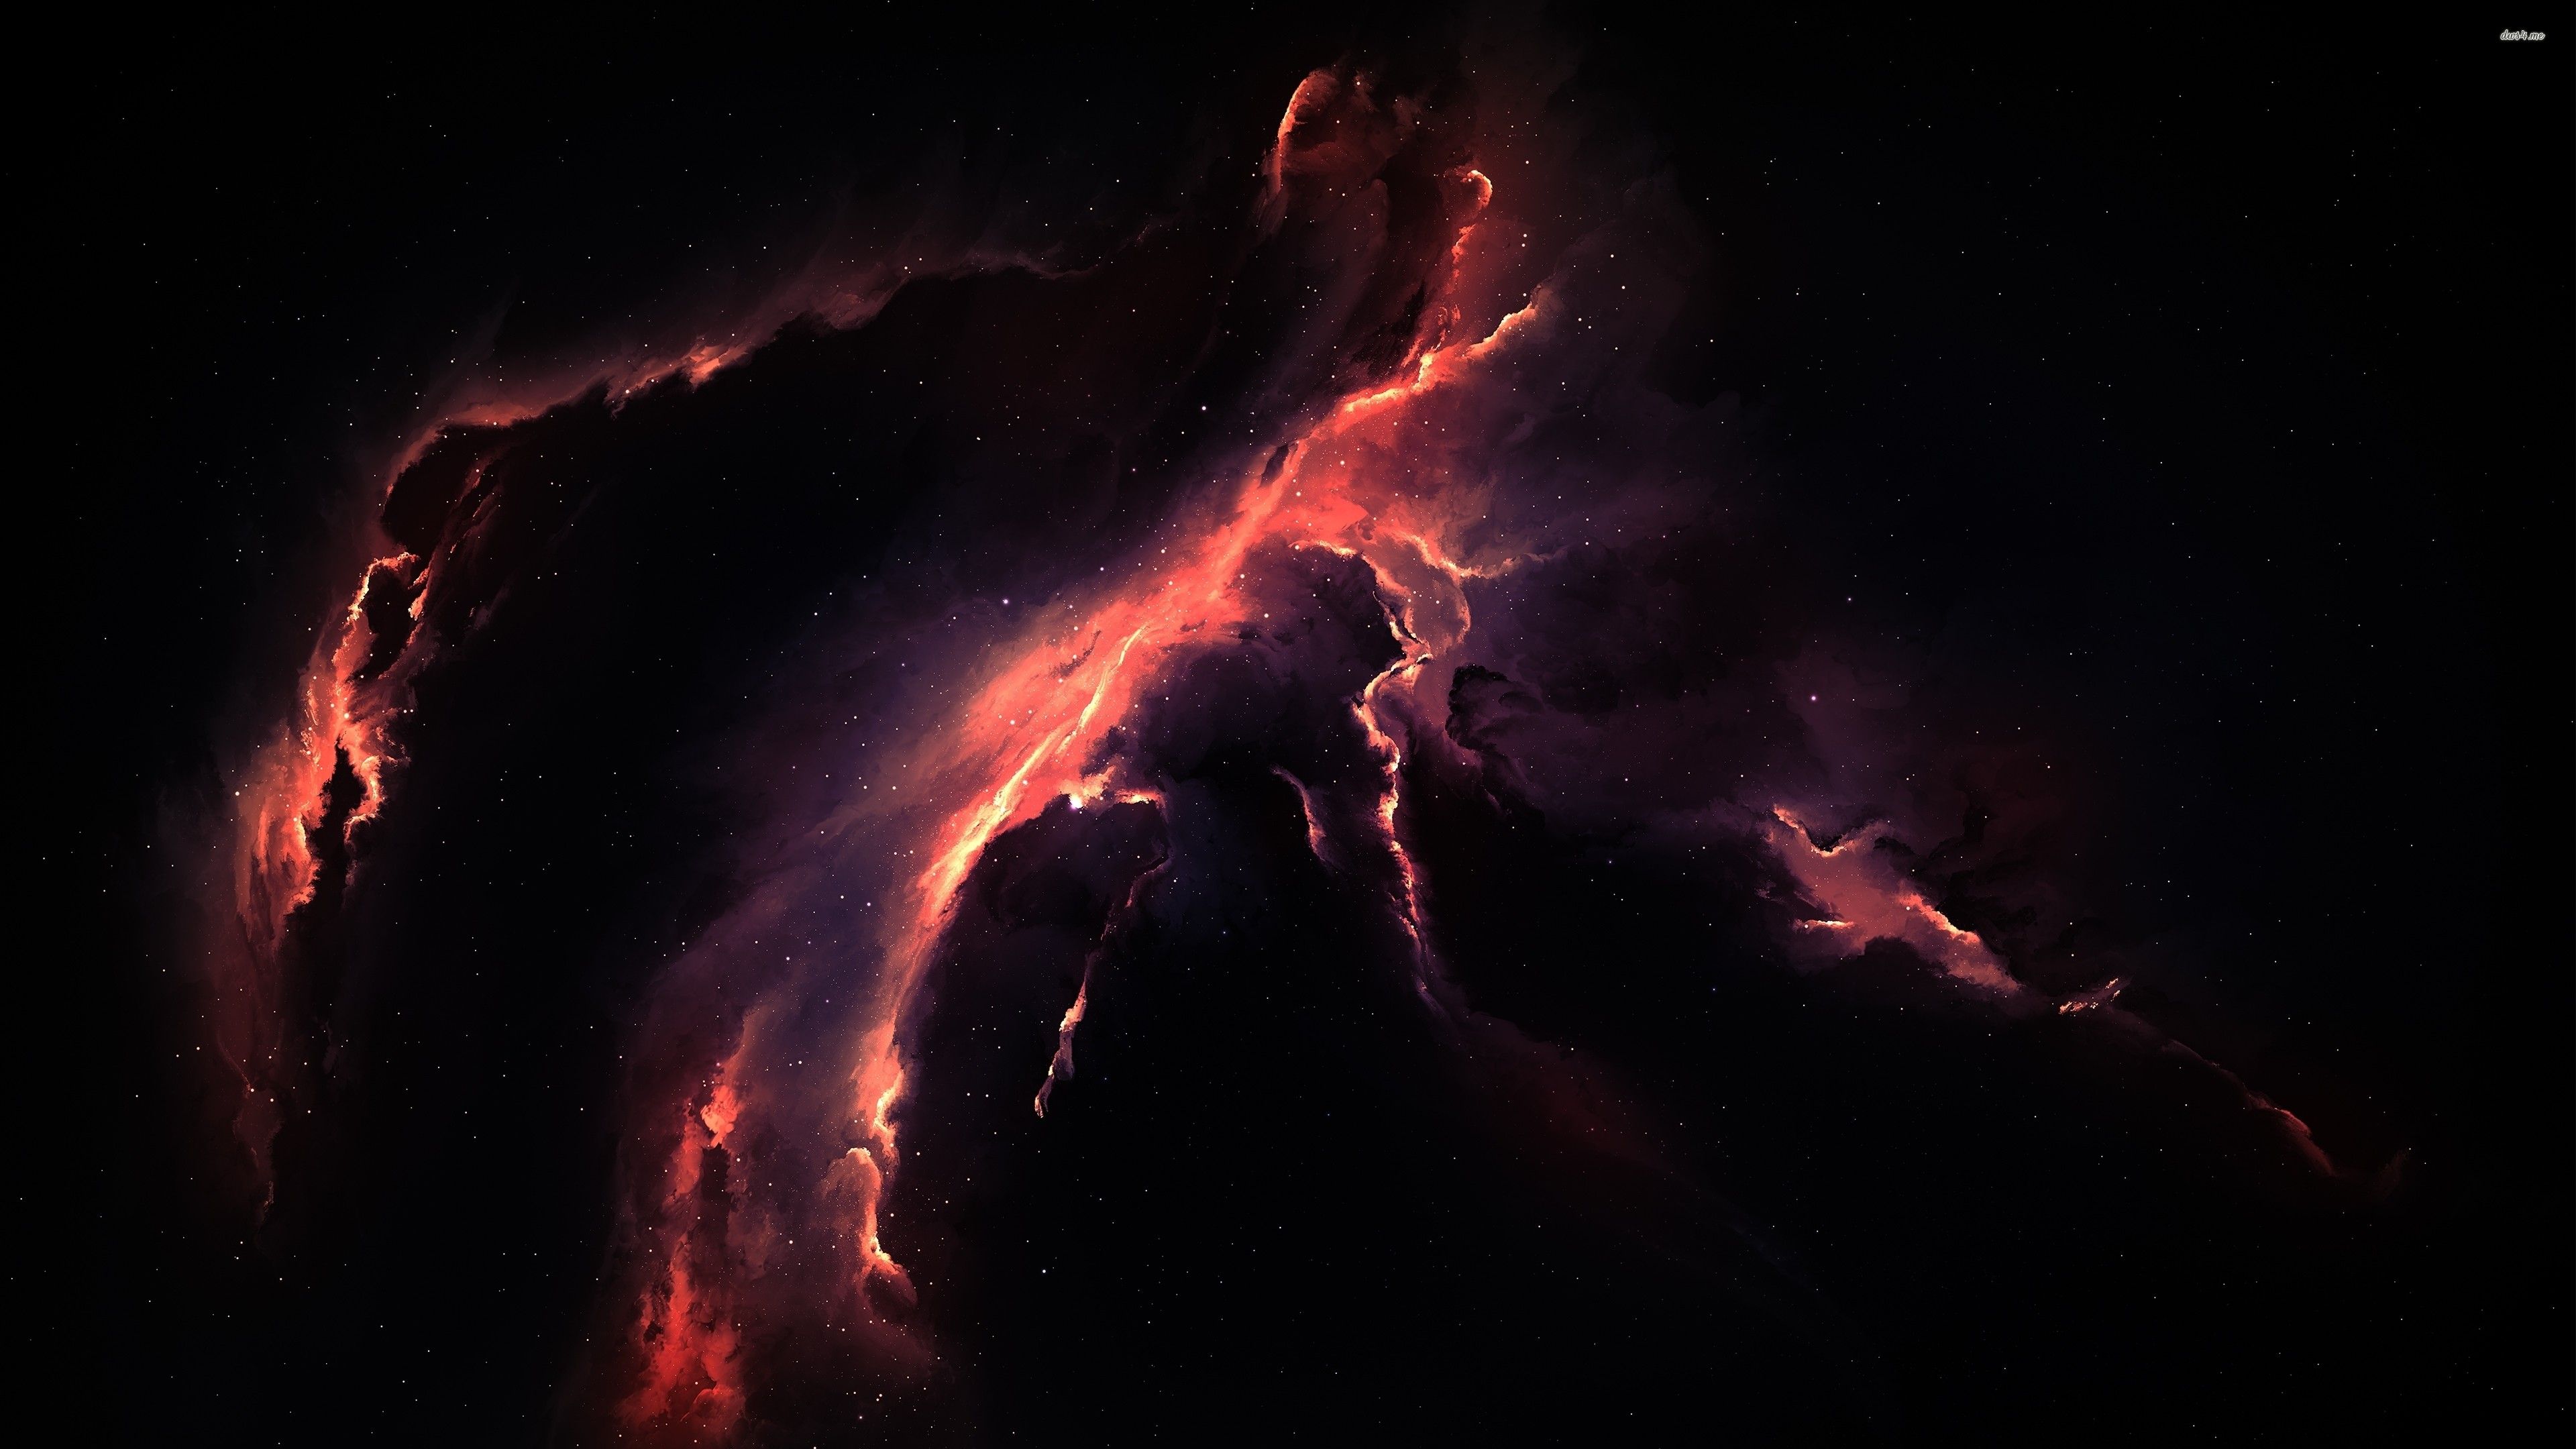 Res: 3840x Red nebula shining in the dark space. Nebula wallpaper, Cloud artwork, Desktop wallpaper